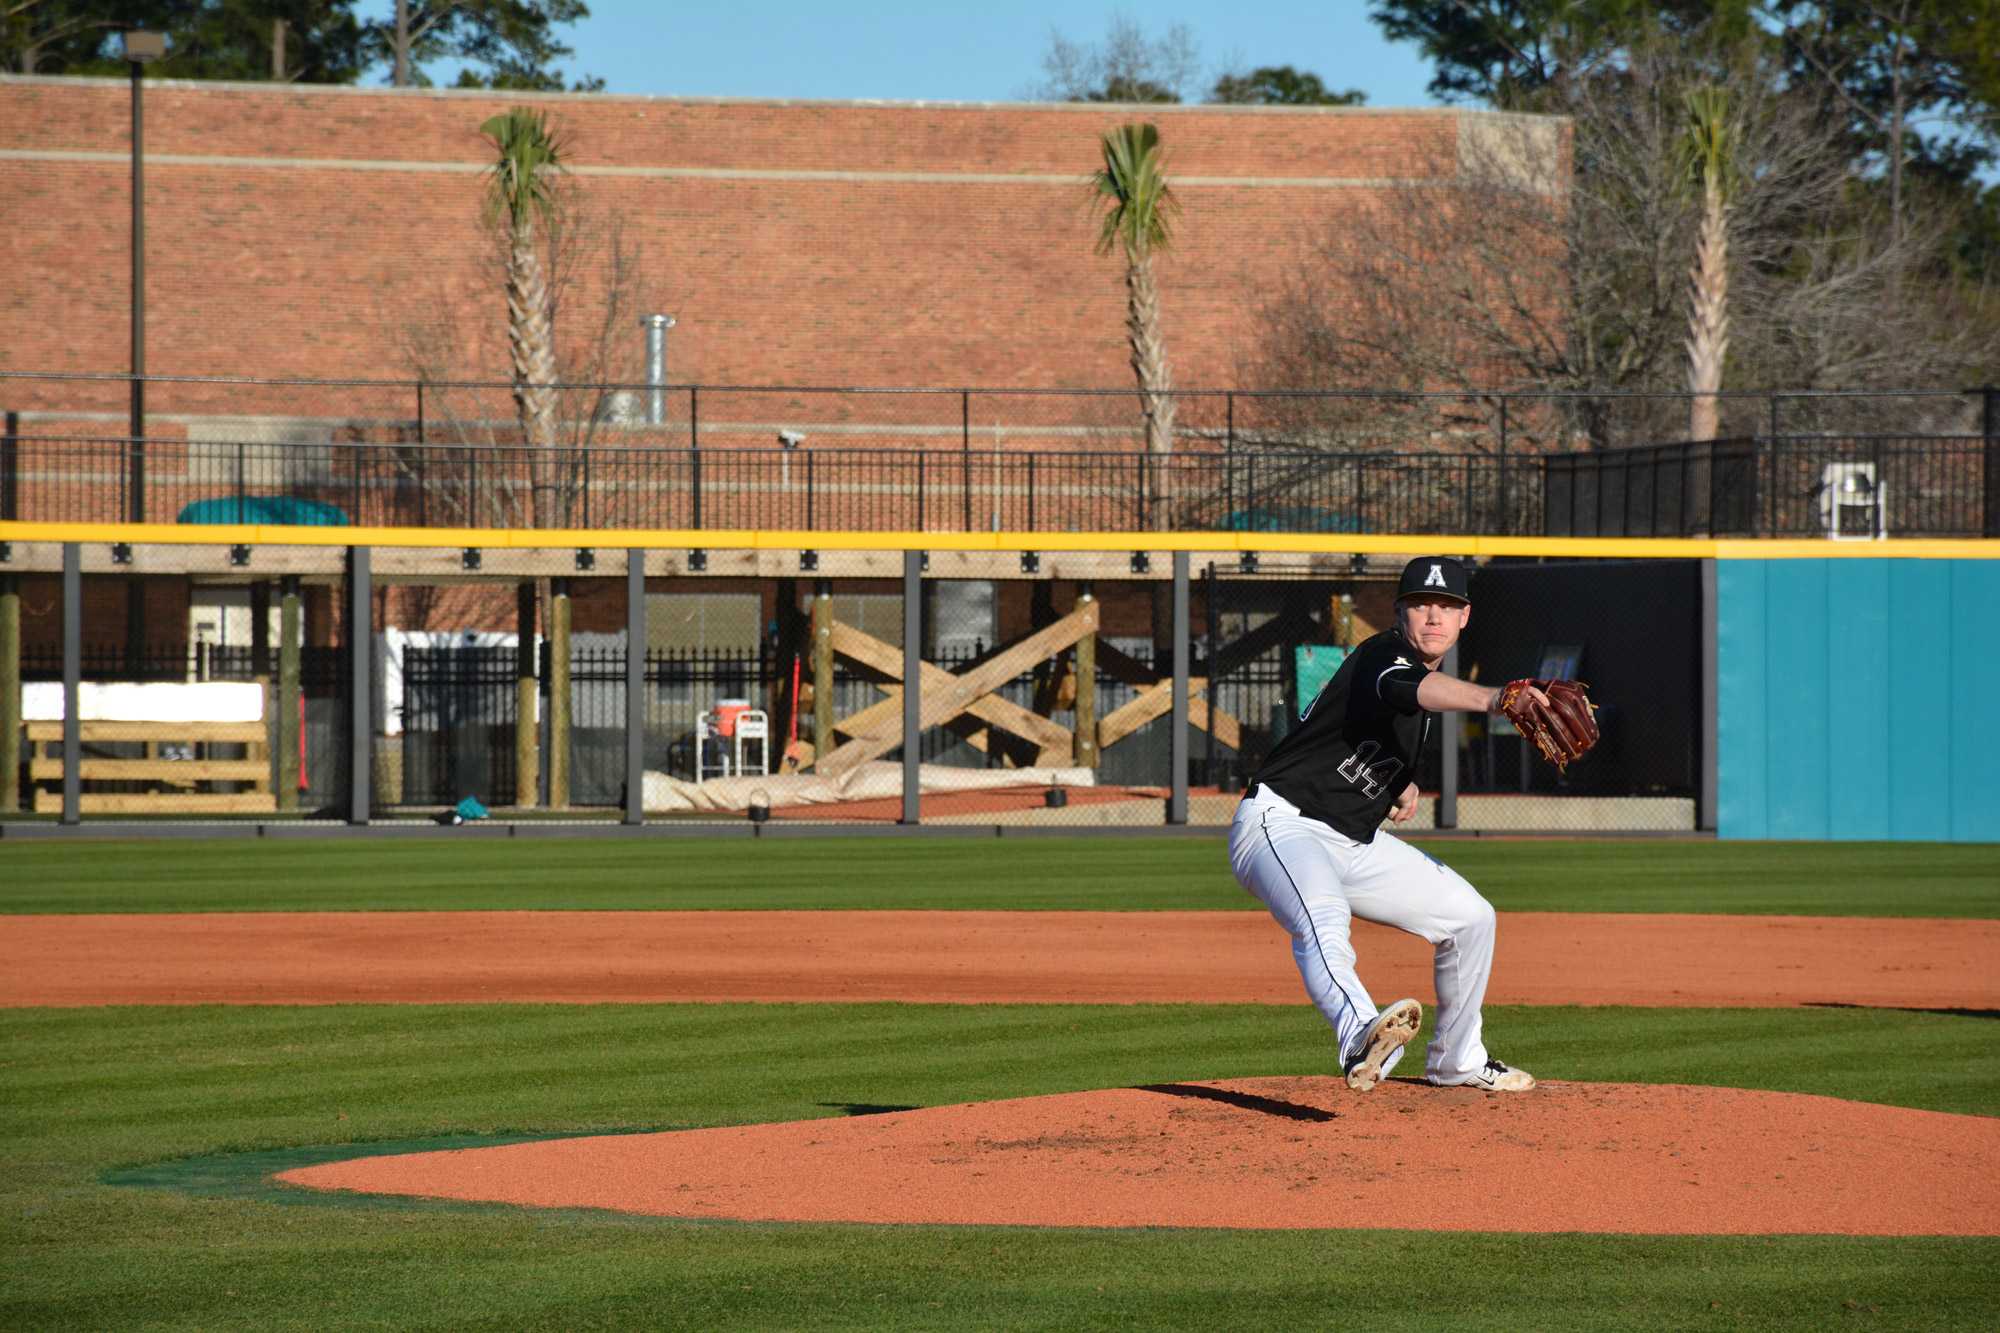 Pitcher Bobby Hampton pitches during a game this season against Coastal Carolina. Photo courtesy of Coastal Carolina Athletics.